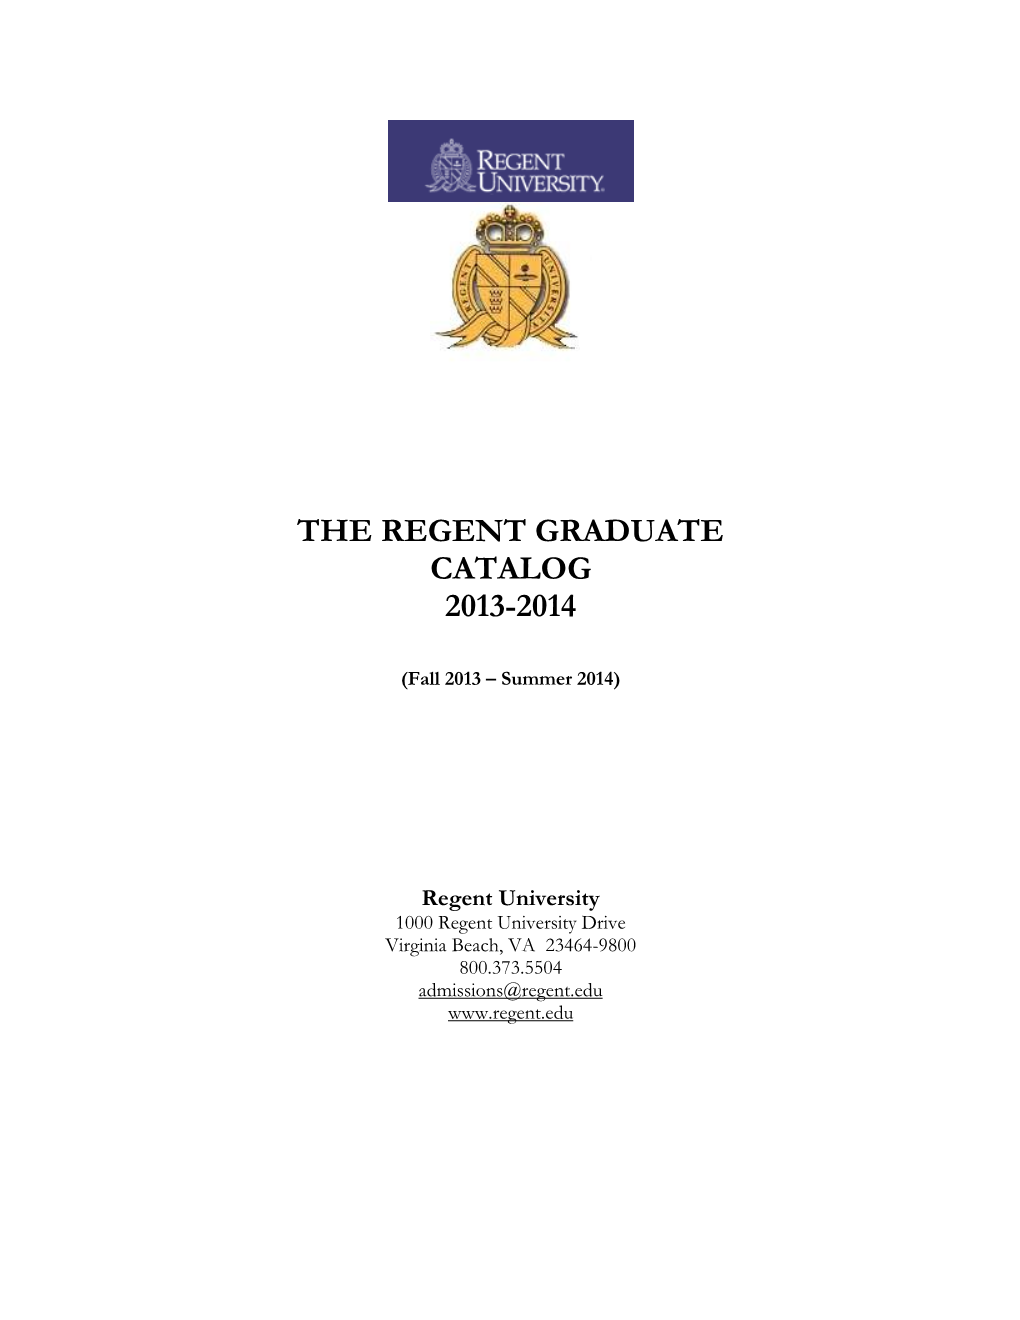 The Regent Graduate Catalog 2013-2014